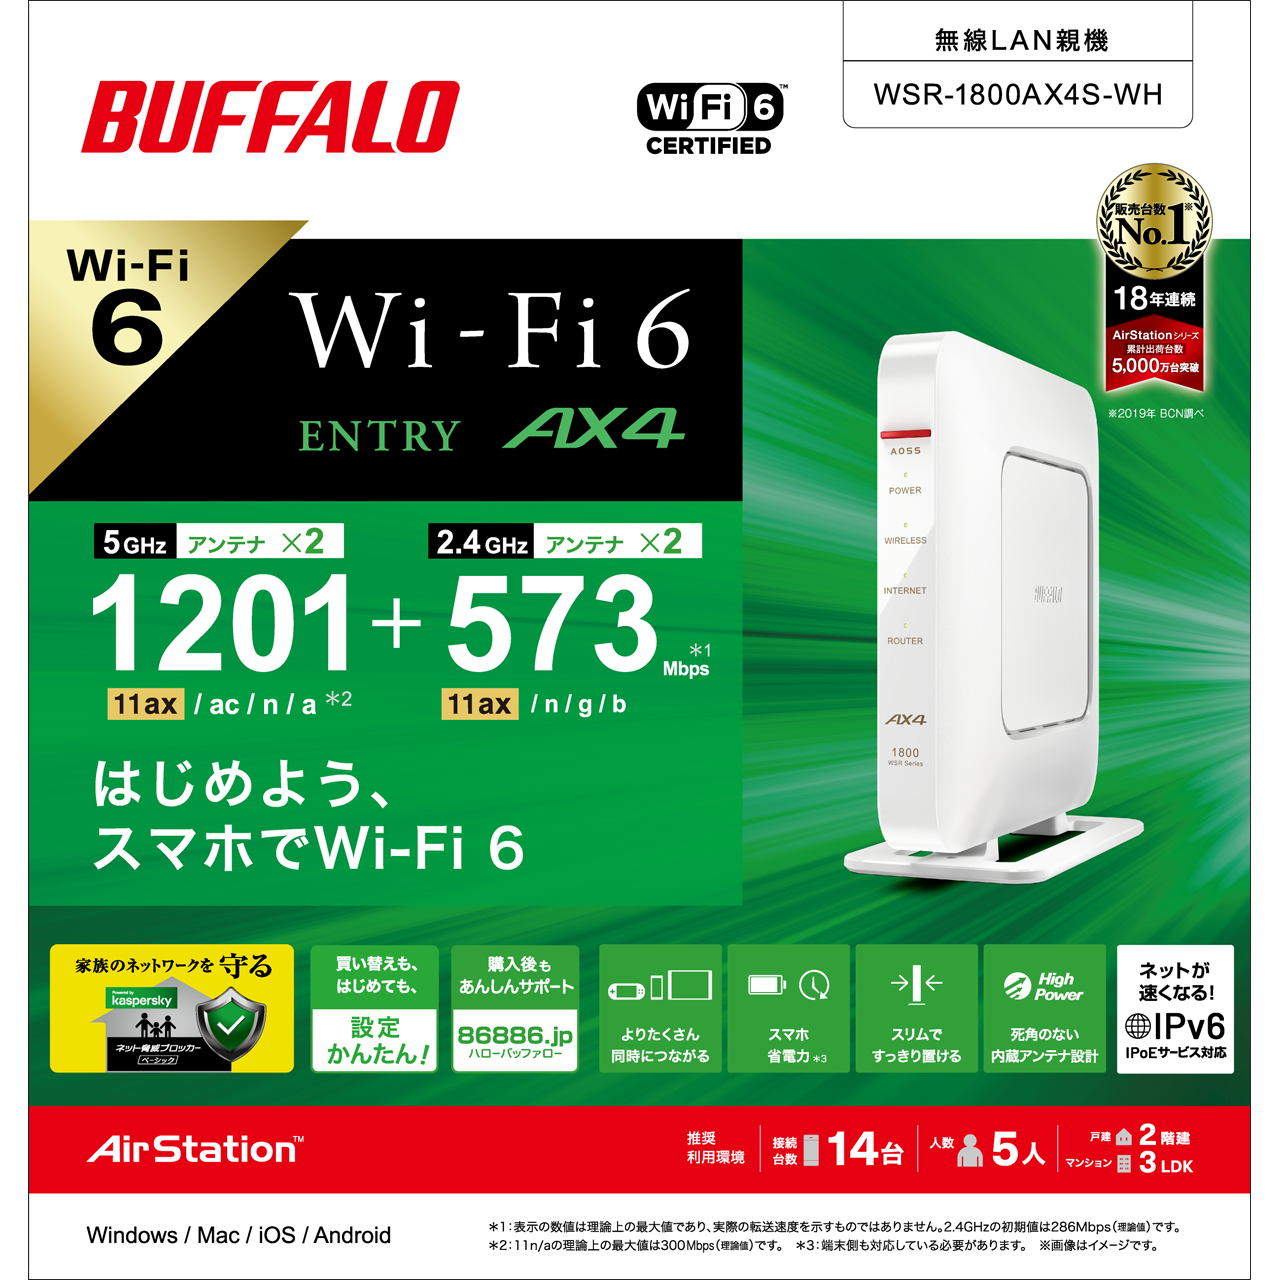 BUFFALO Wi-Fi中継機 WSR-1800AX4S-WH - 通販 - nickhealey.co.uk